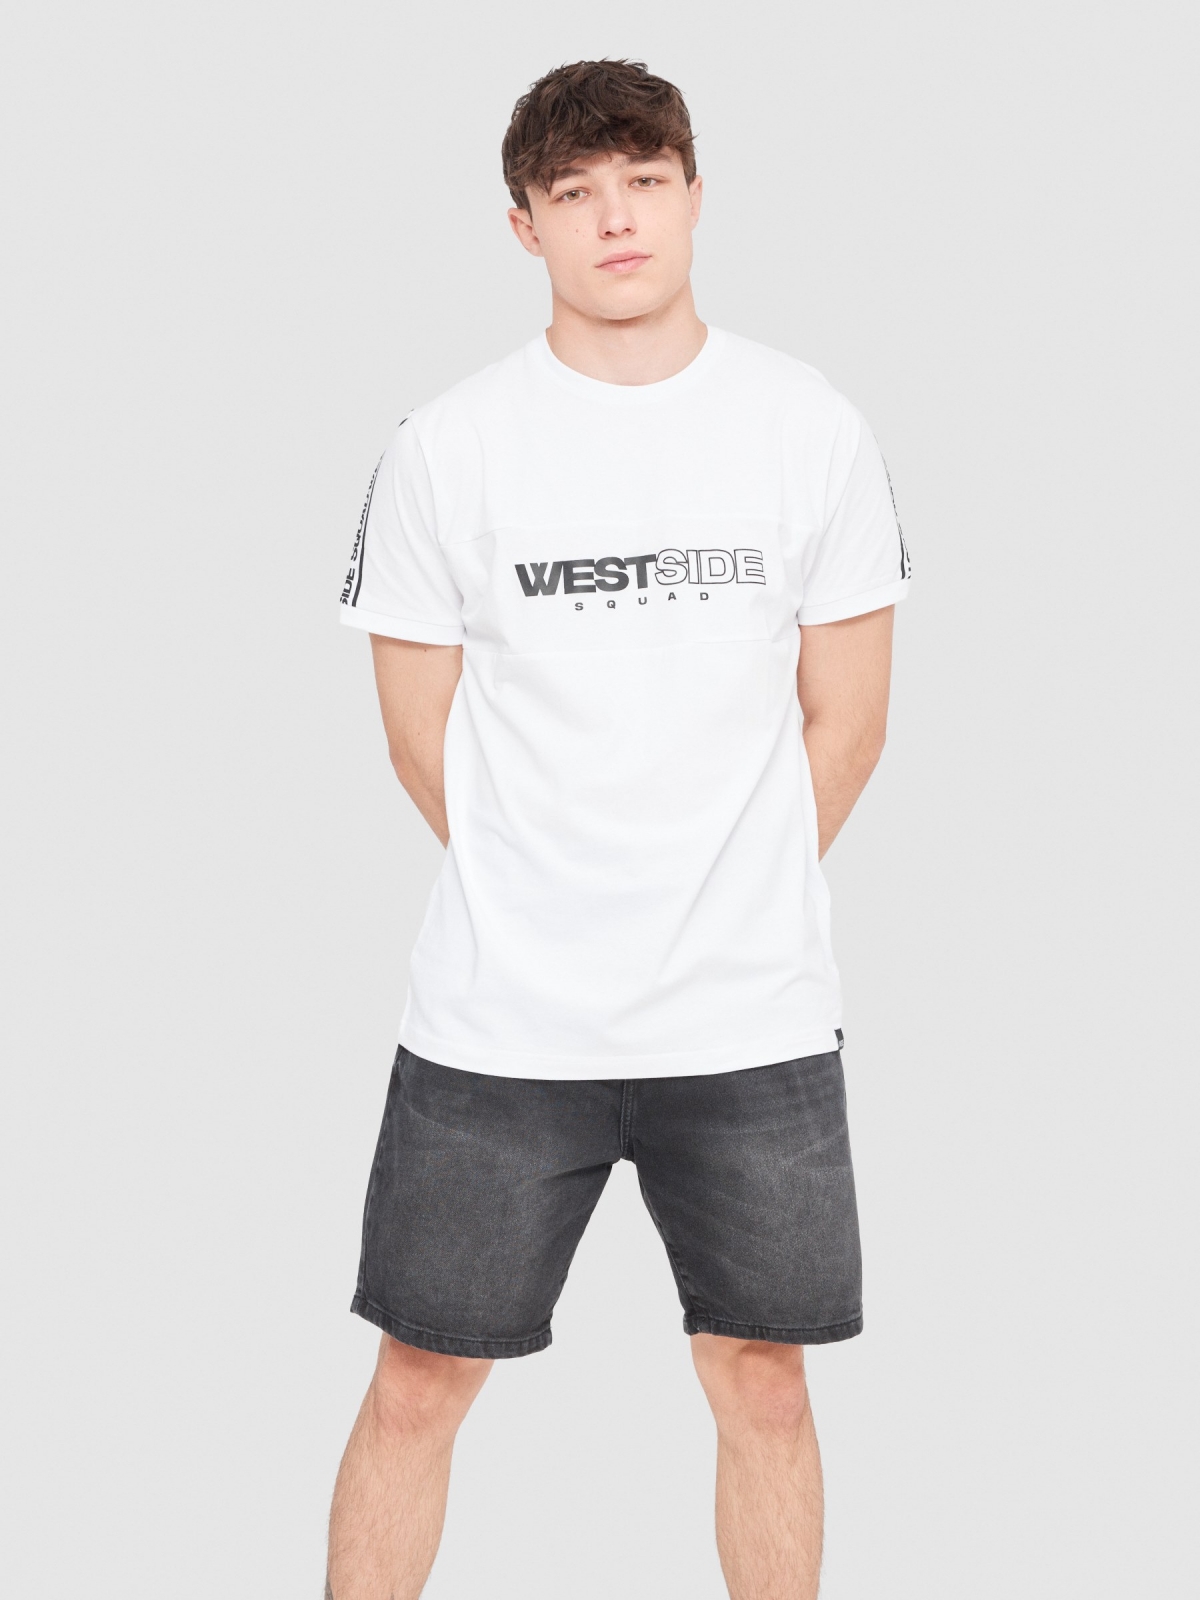 Camiseta Westside blanco vista media frontal